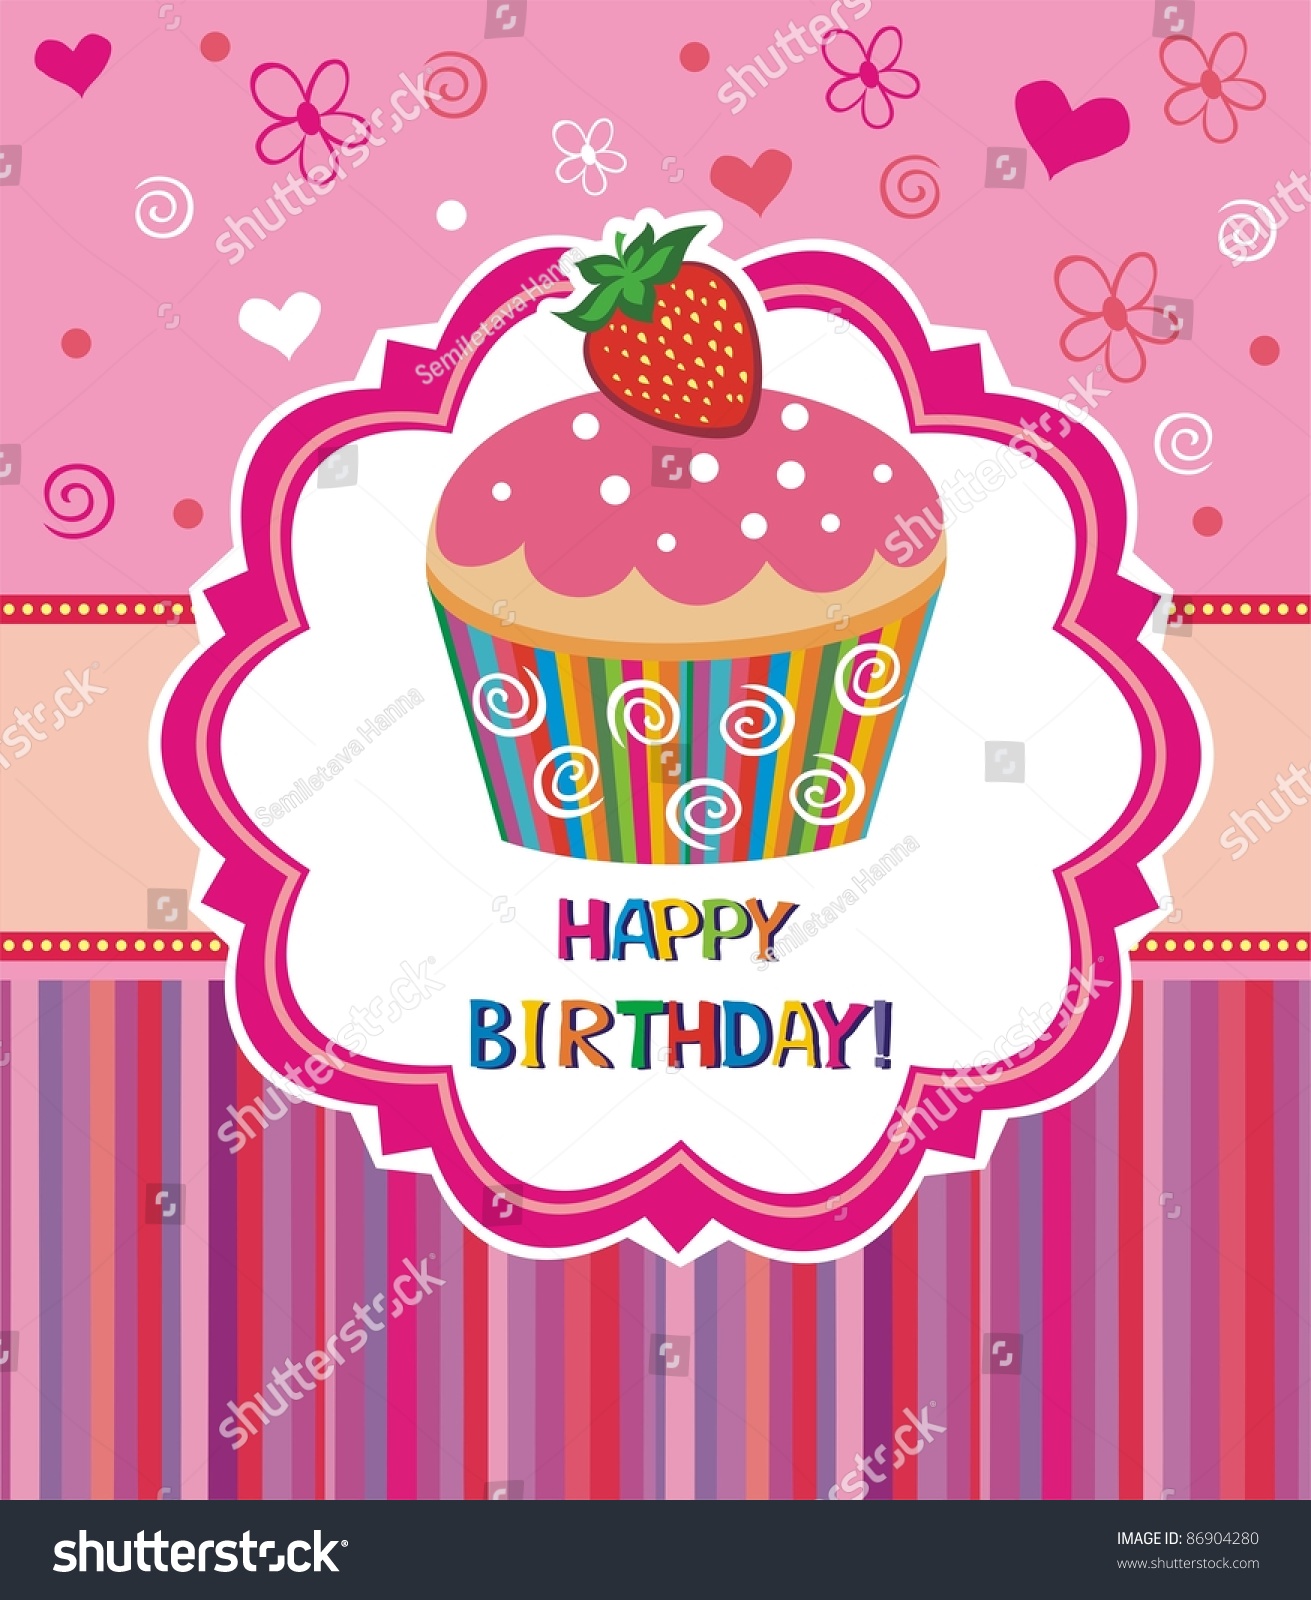 Happy Birthday Card Illustration Cute Cupcake Stock Vector 86904280 ...